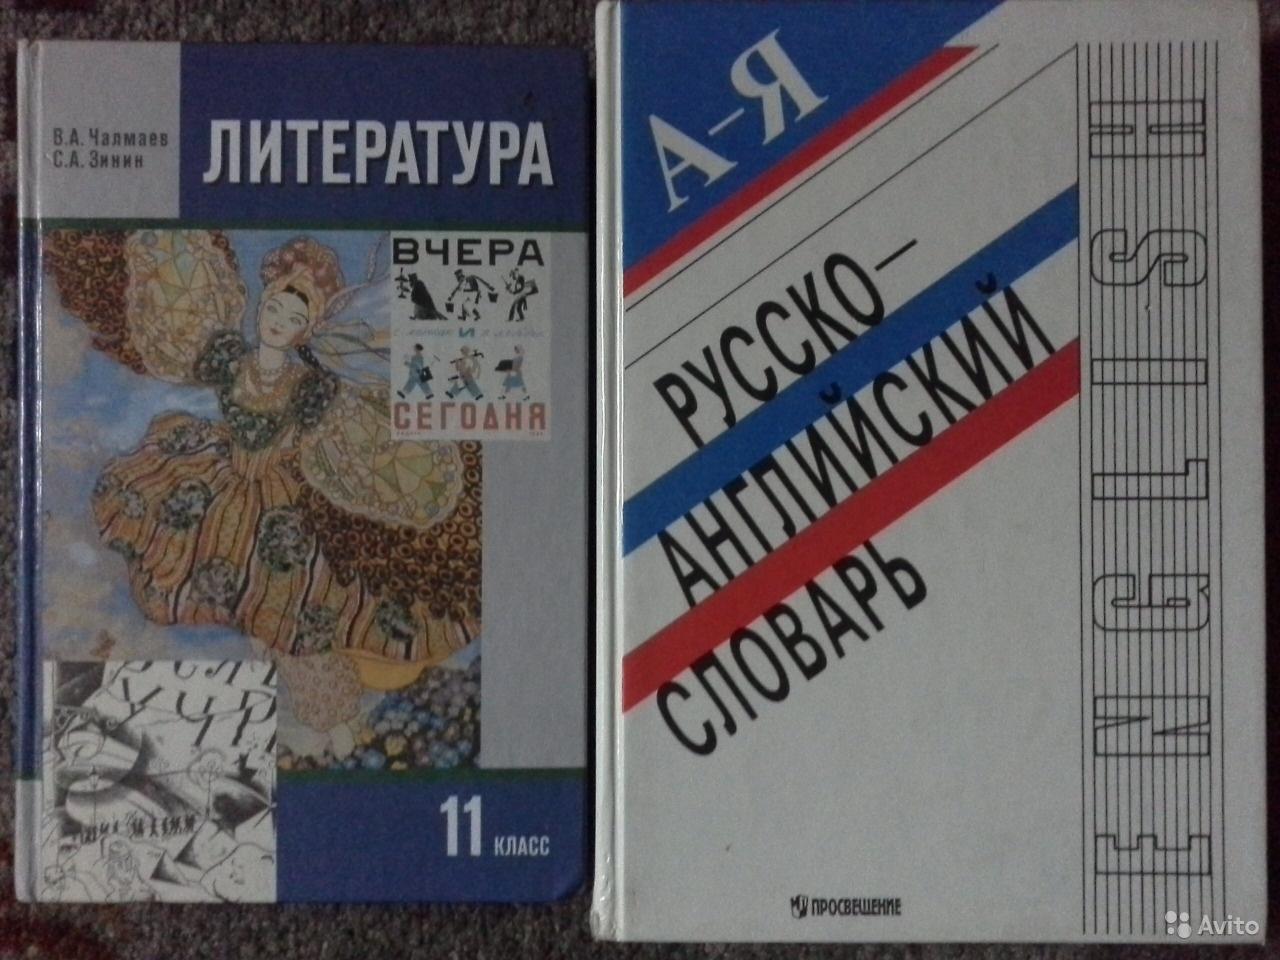 Литература. 11 класс (2 части) В. А. Чалмаев, С. А. Зинин